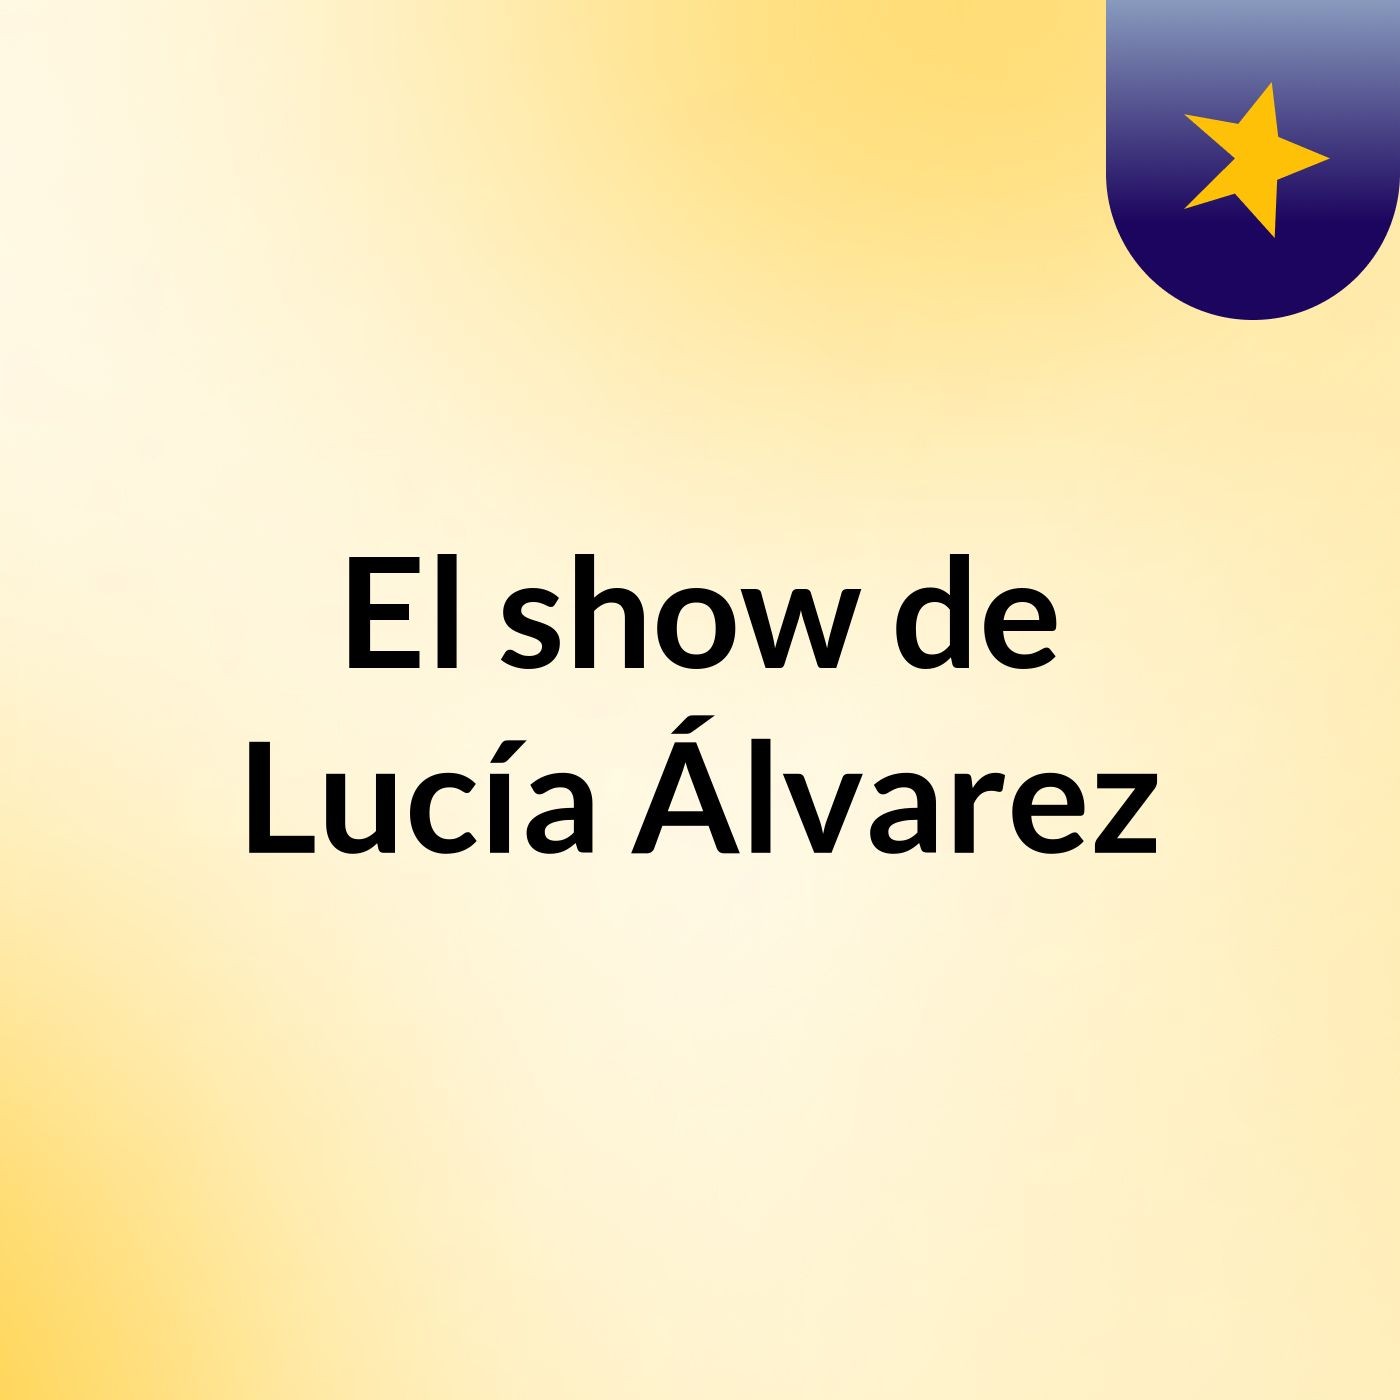 El show de Lucía Álvarez